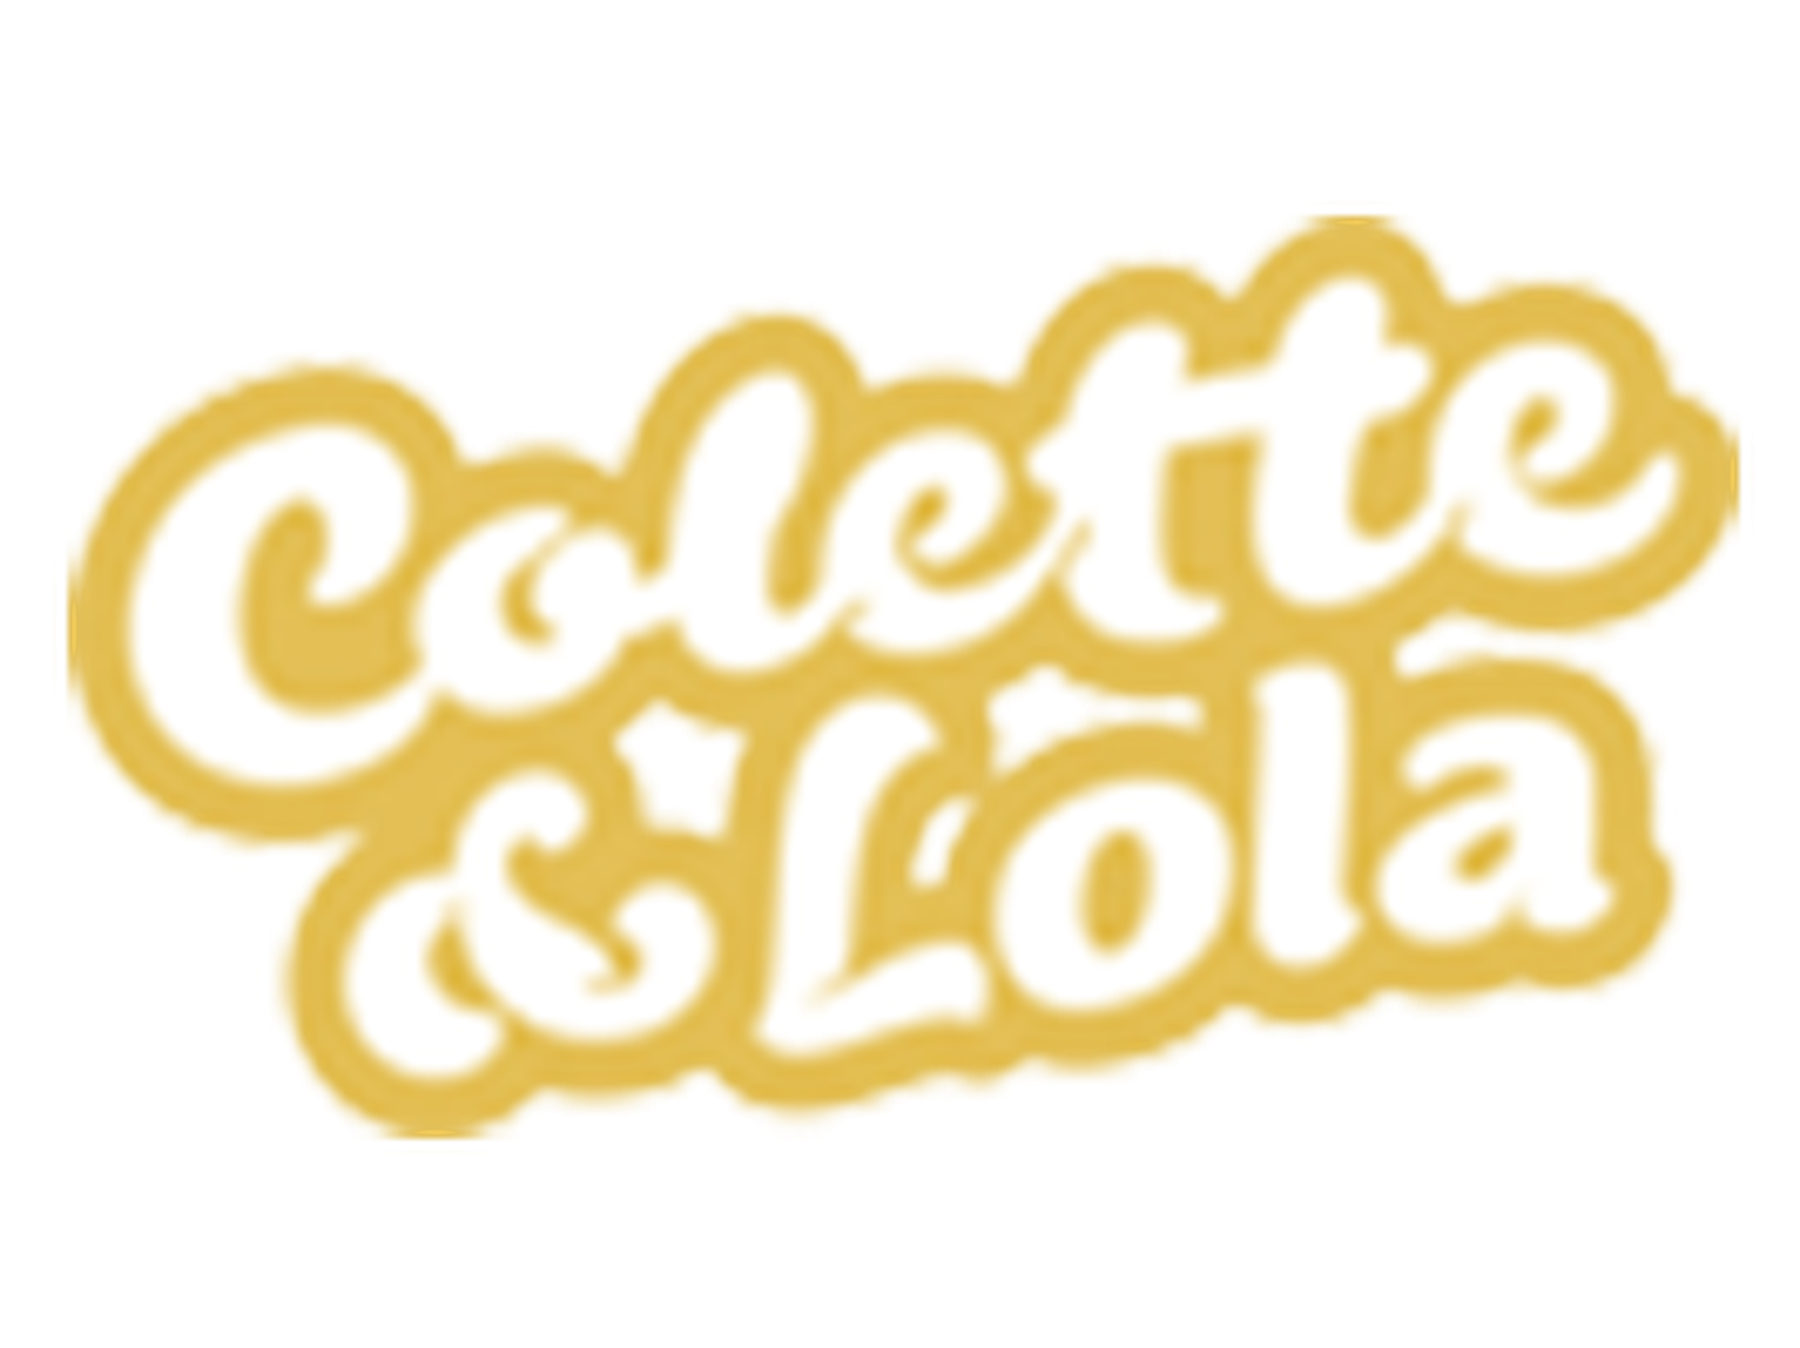 Kode Promo Colette & Lola